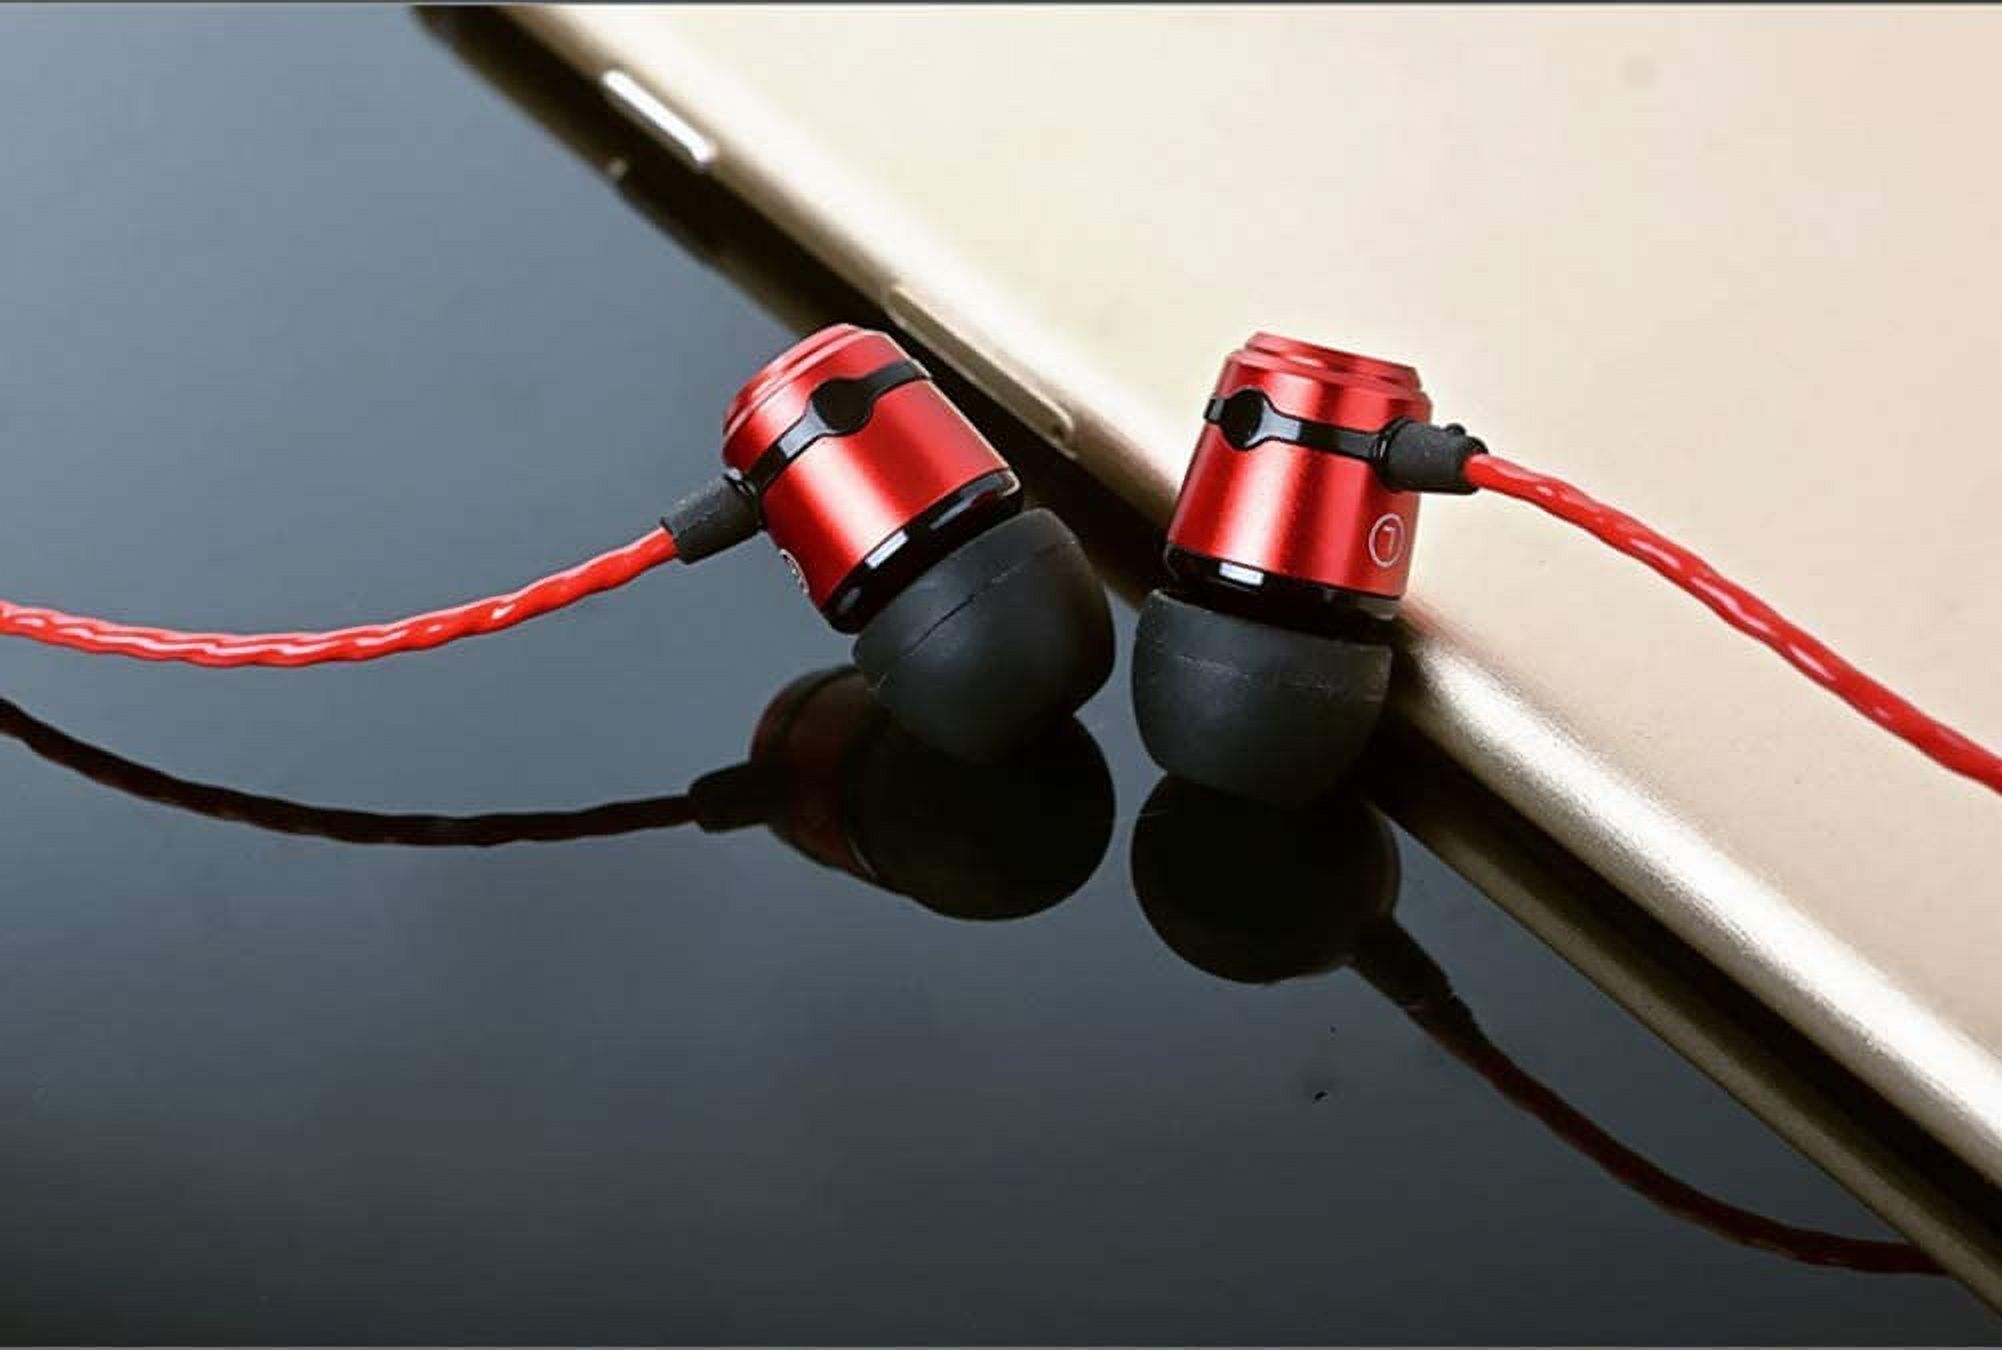 Water & Ice Inner Ear Headphones, Red, E50 - image 3 of 8